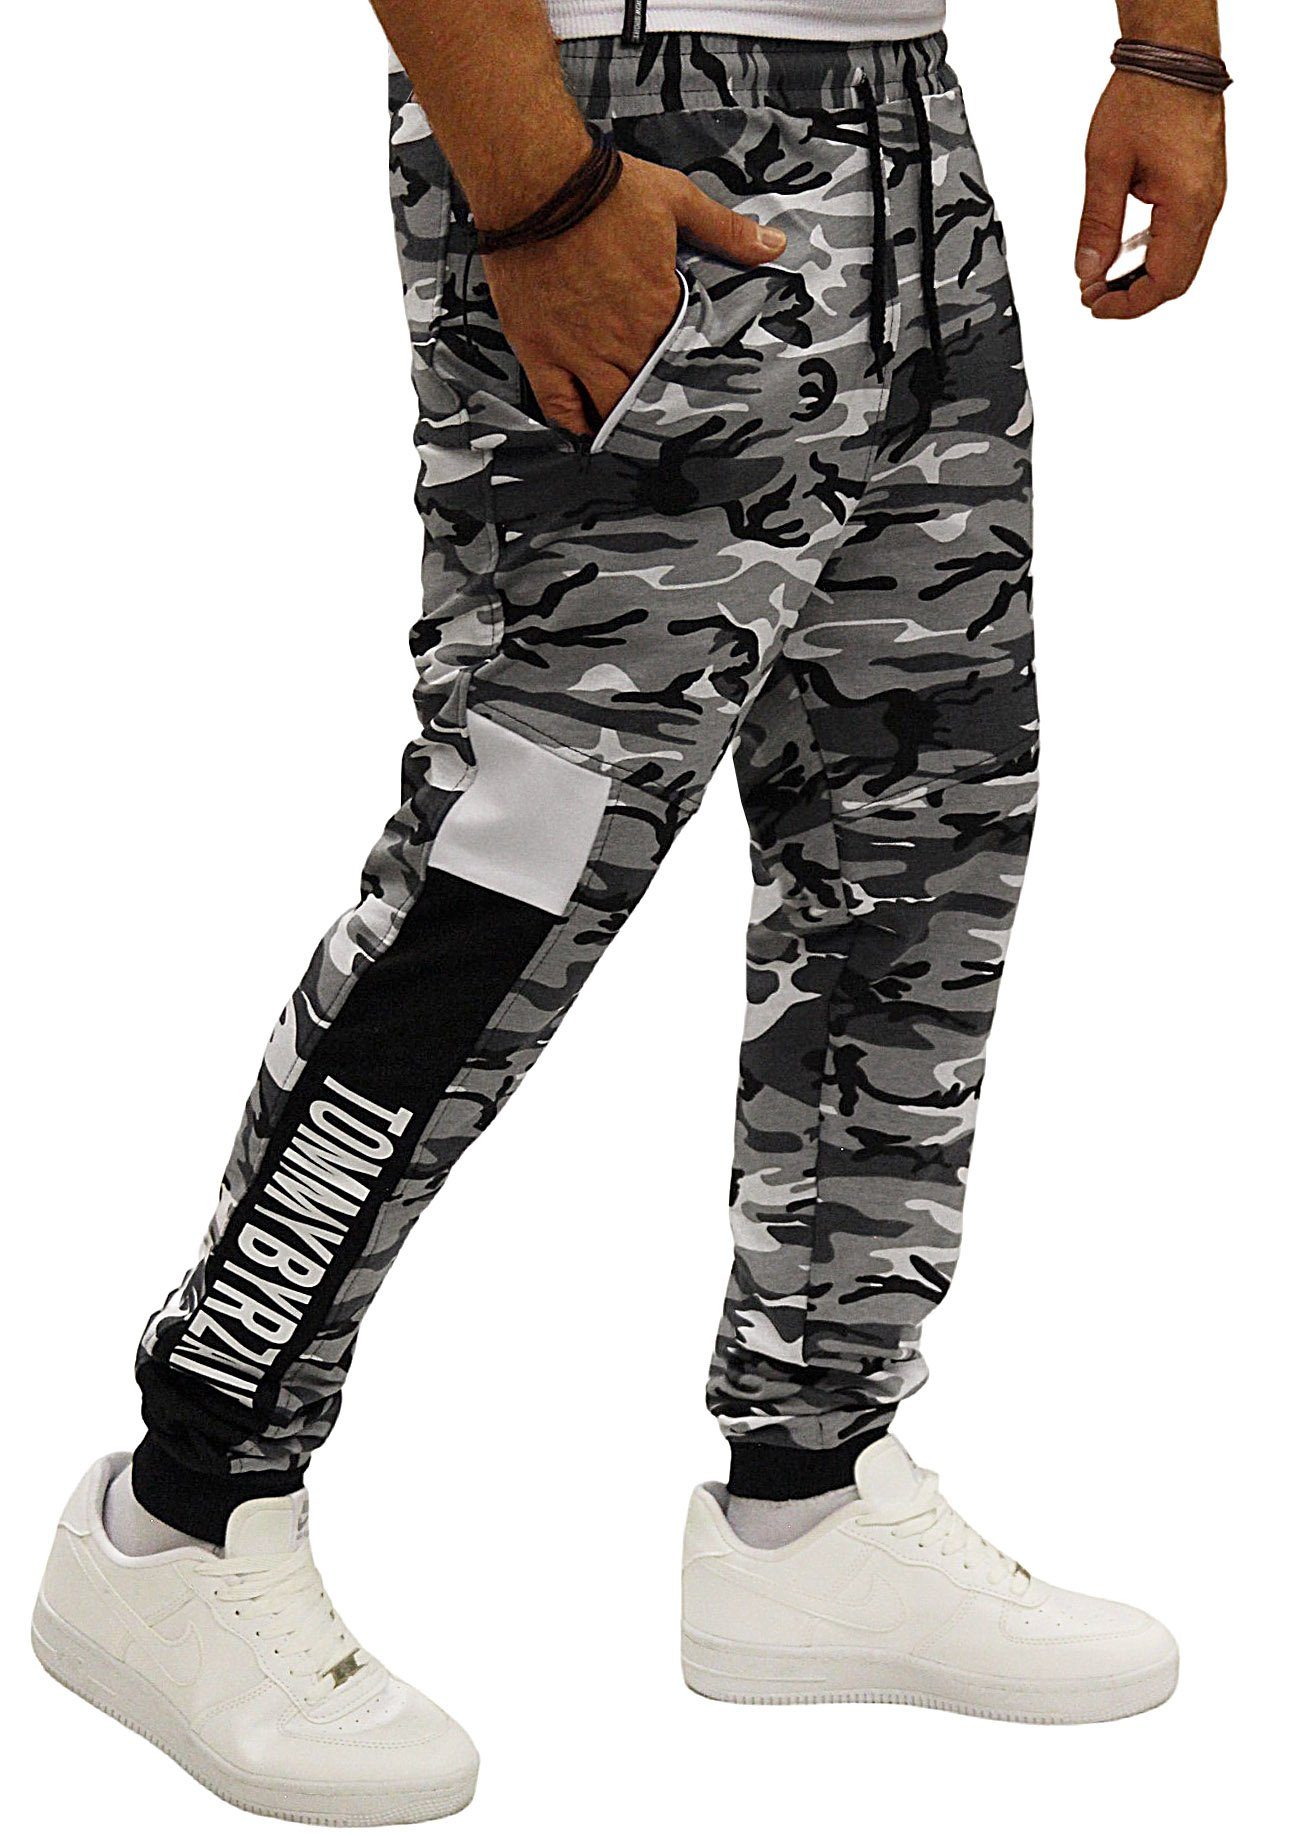 RMK Sporthose »Herren Trainingshose Jogginghose Fitnesshose Camouflage Army  Tarn Hose« online kaufen | OTTO